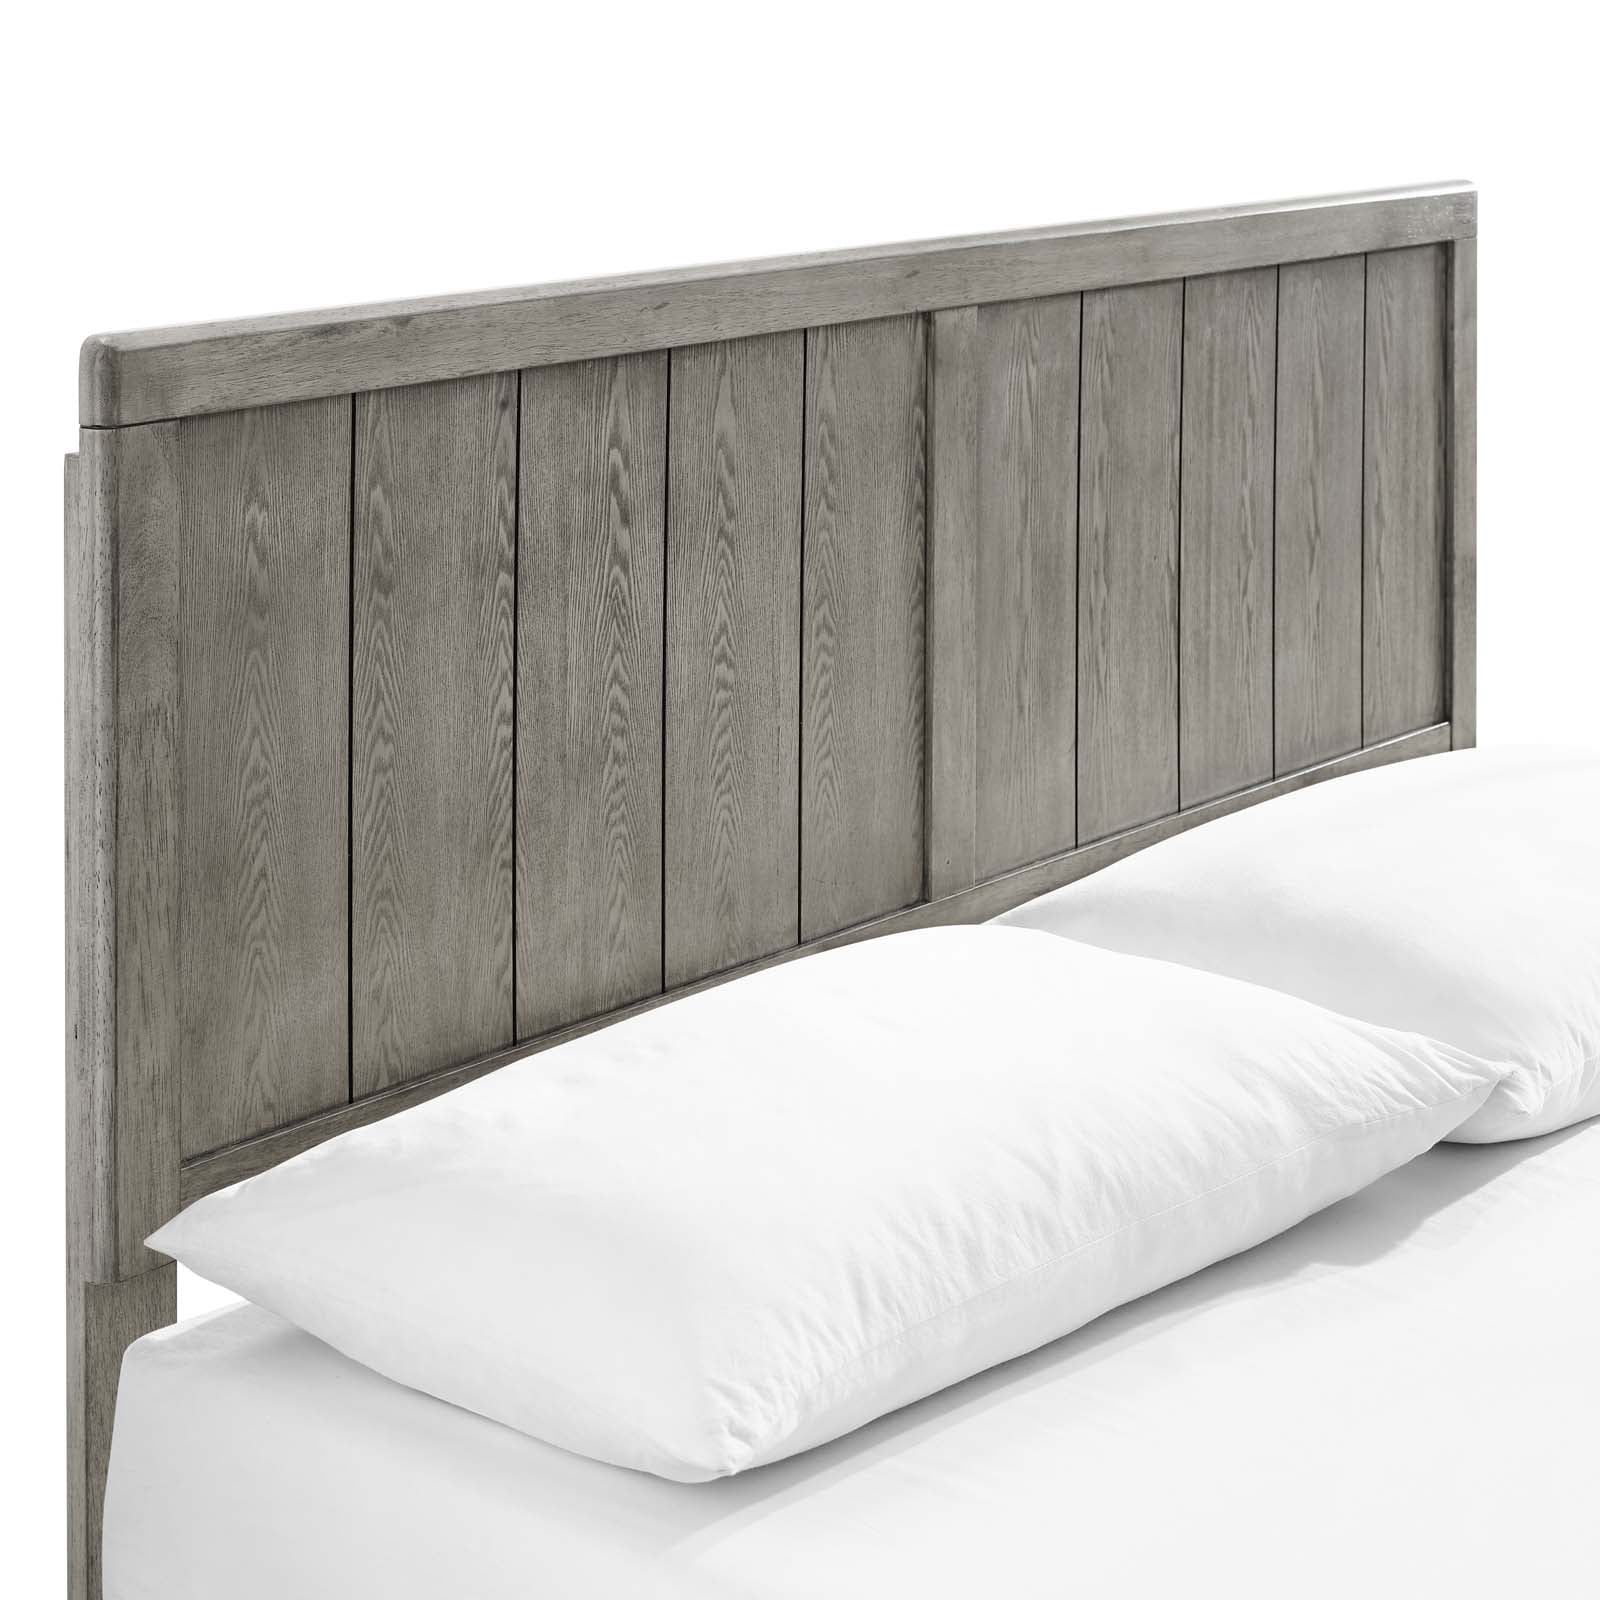 Alana Wood Platform Bed With Angular Frame - East Shore Modern Home Furnishings